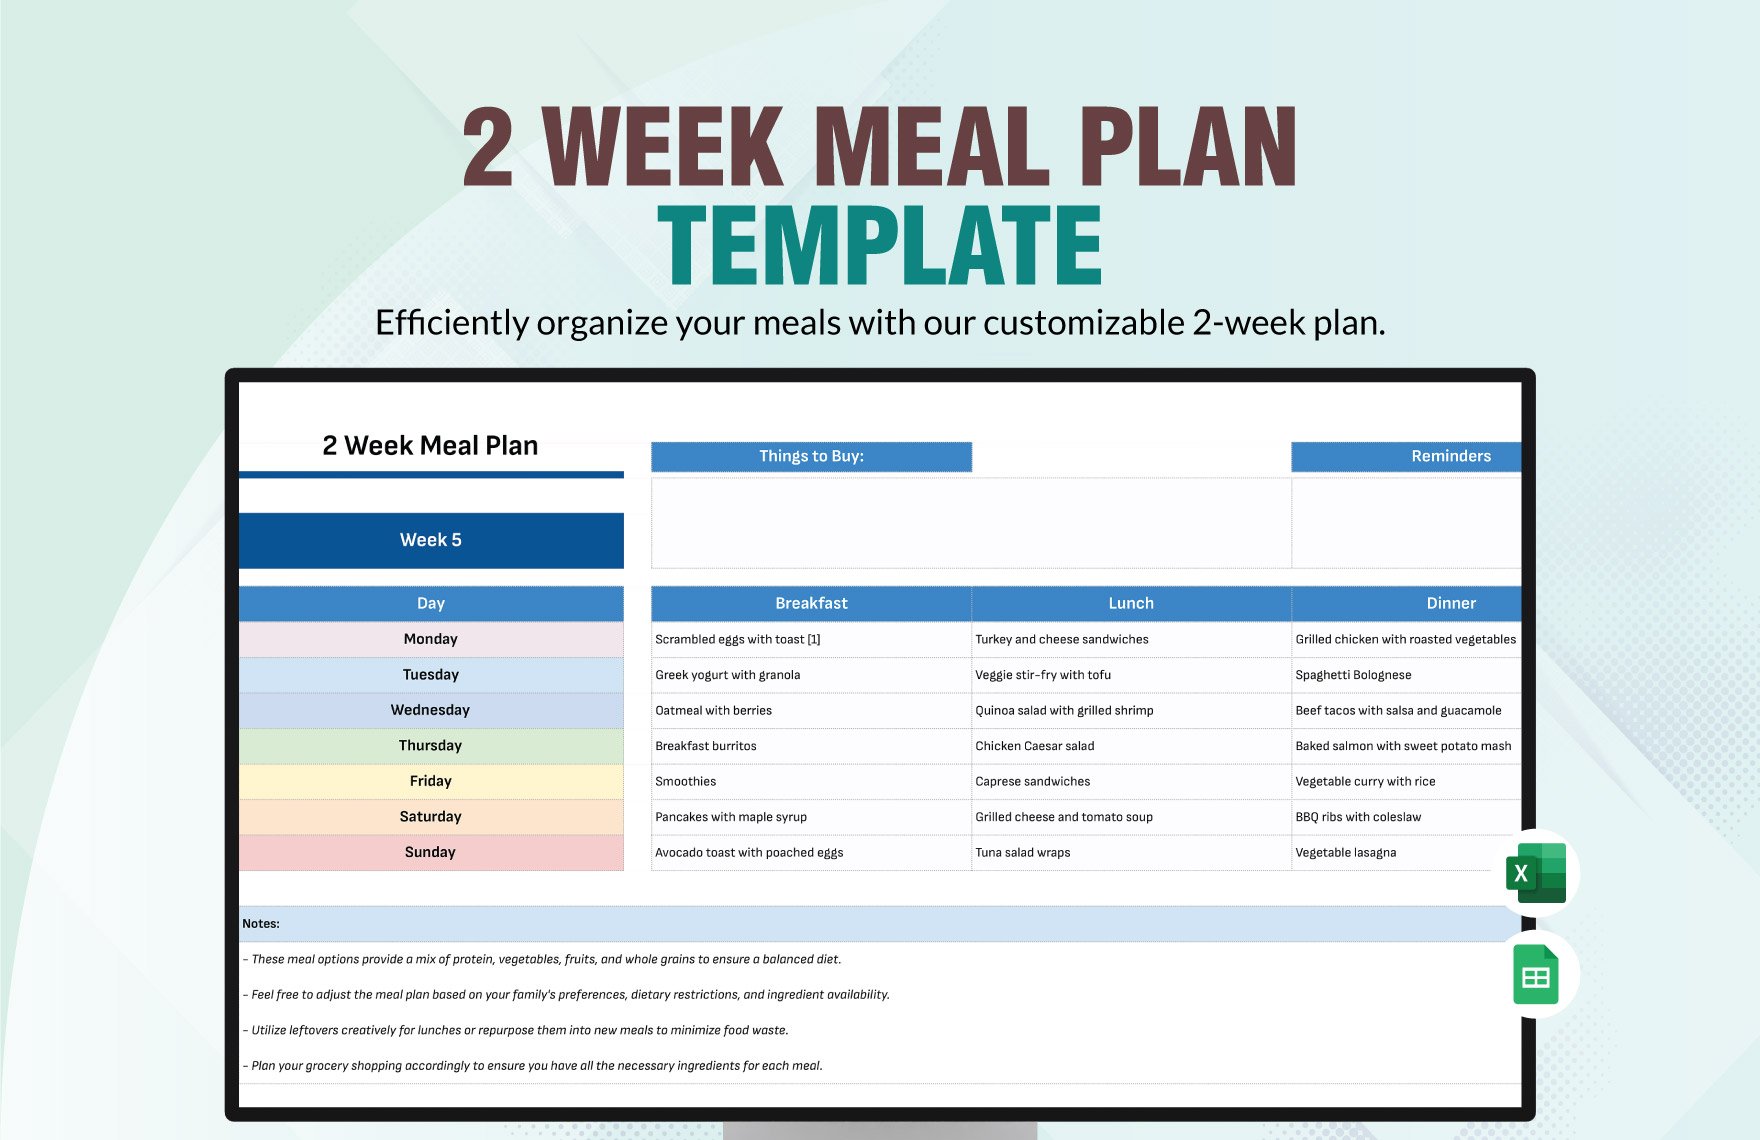 2 Week Meal Plan Template in Excel, Google Sheets